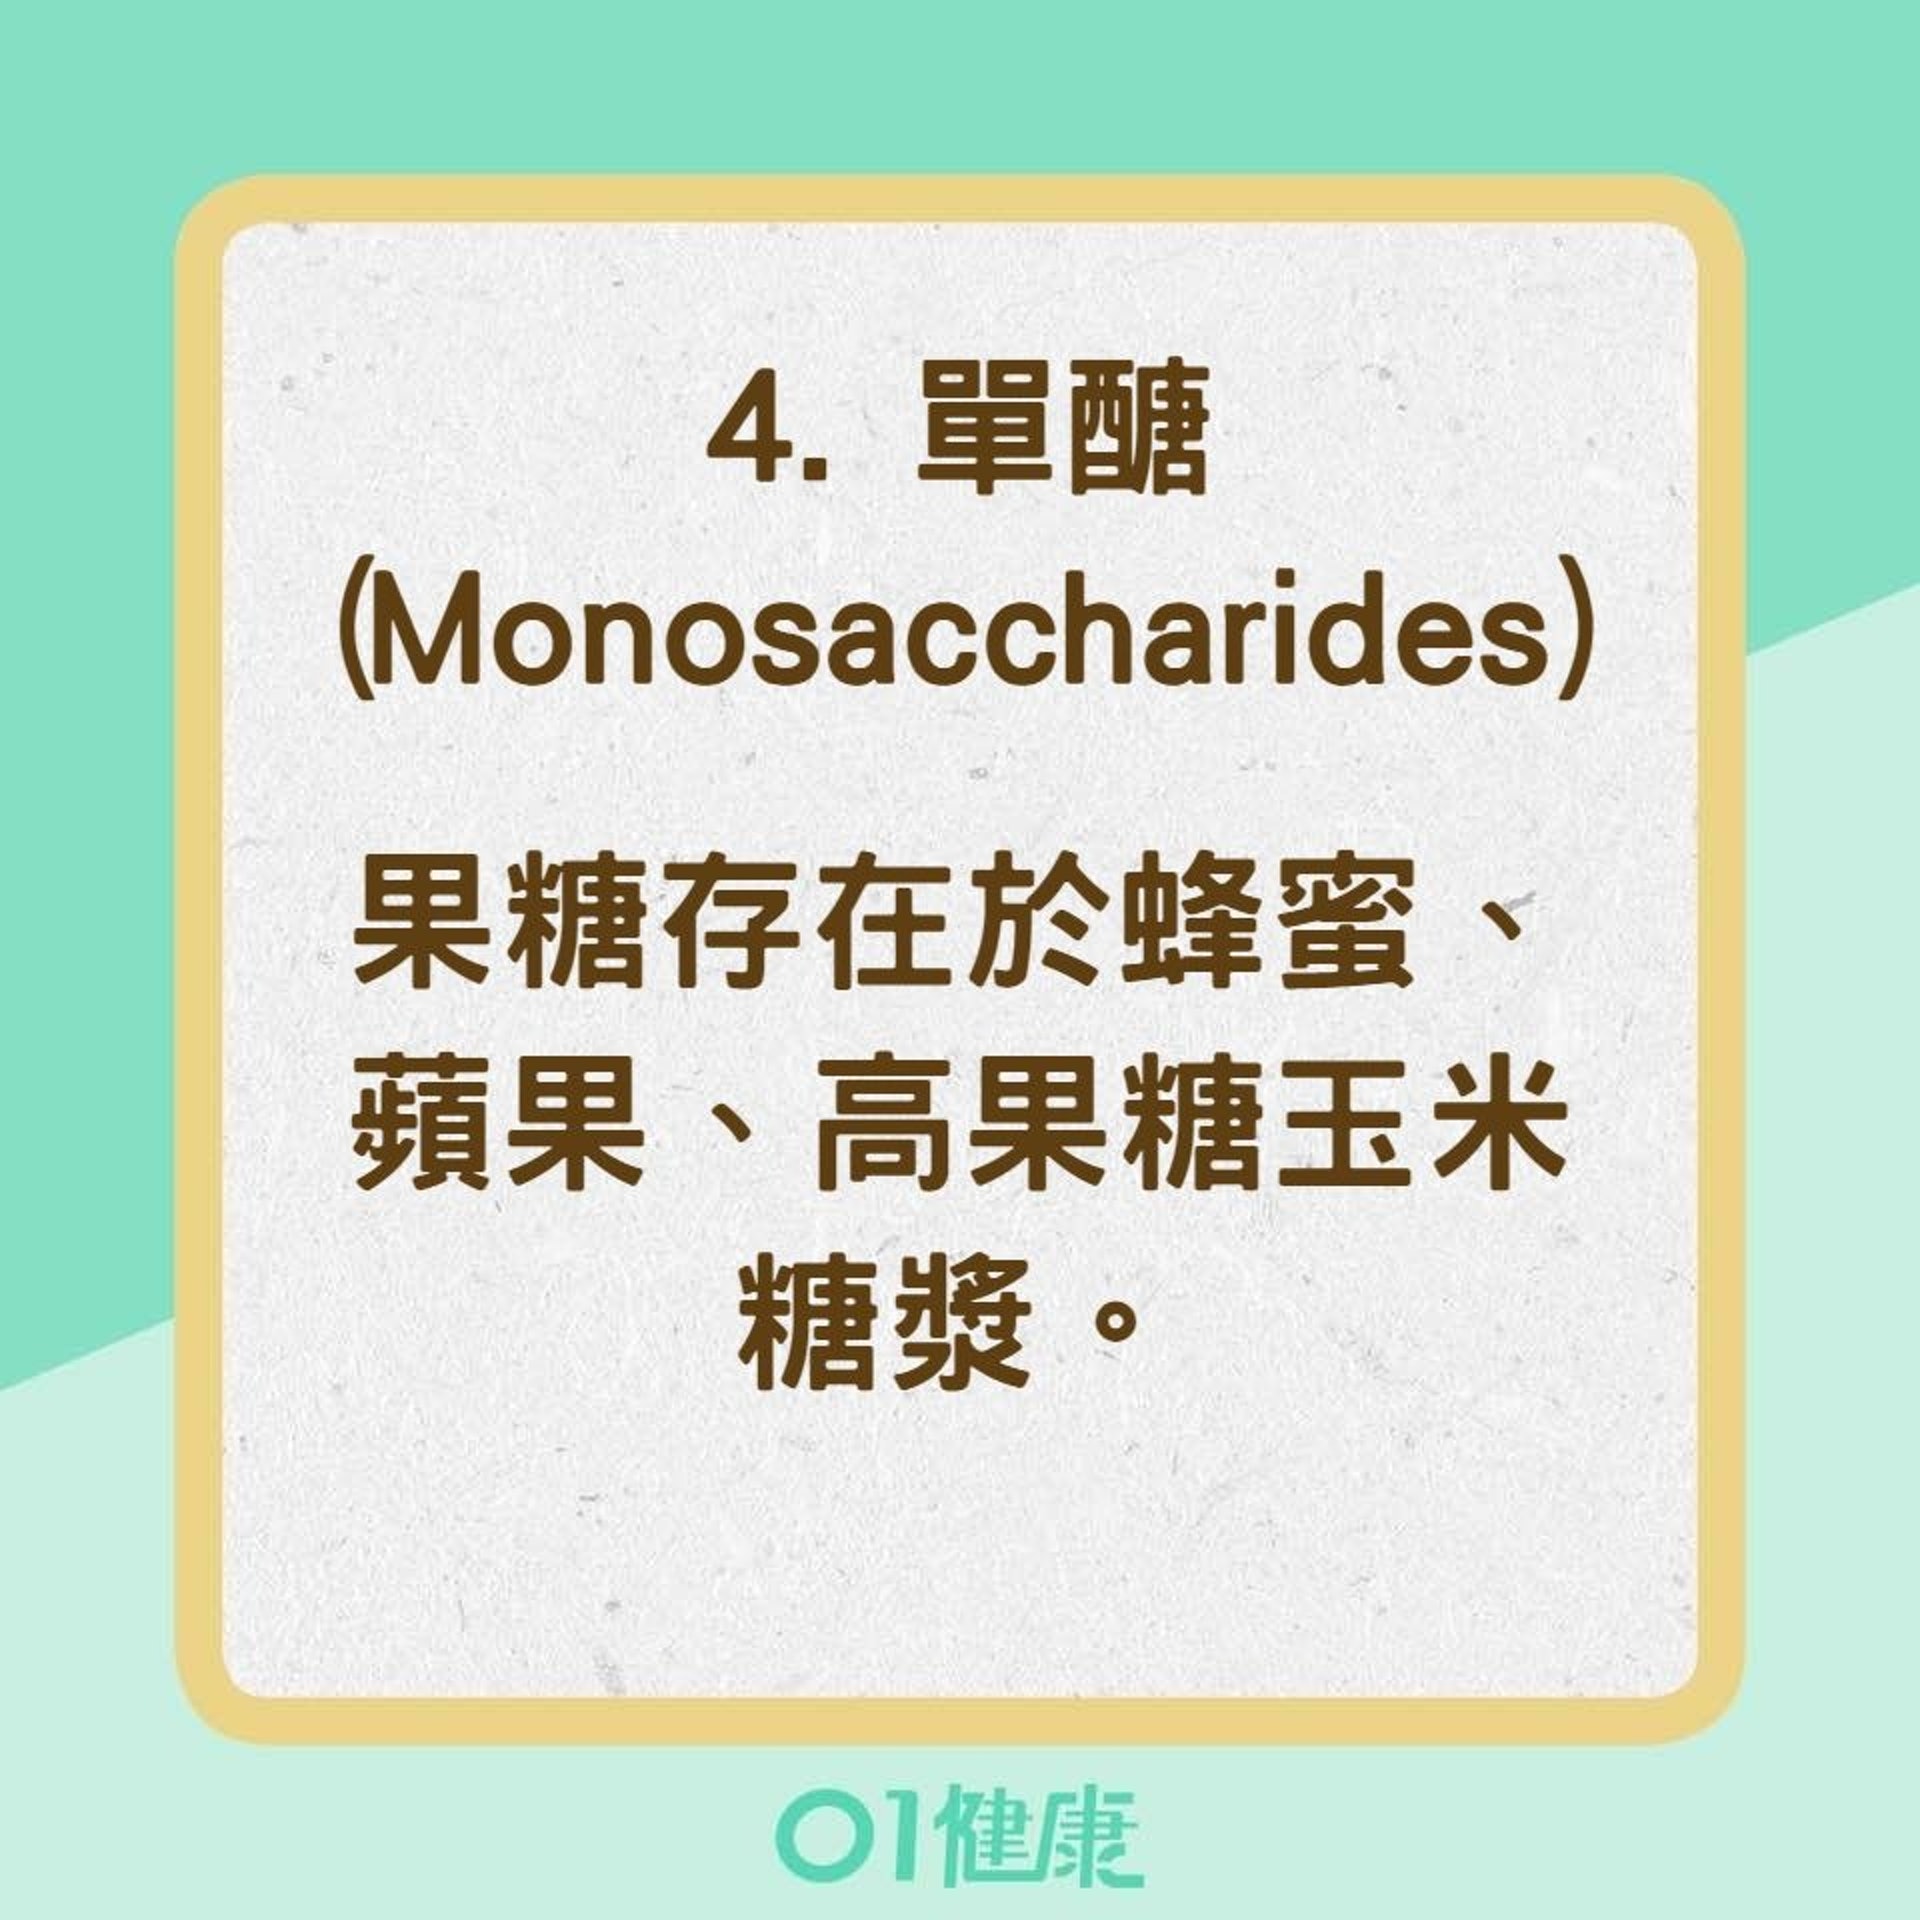 FODMAP各字母代表的意義及食物：單醣(Monosaccharides)（01製圖）